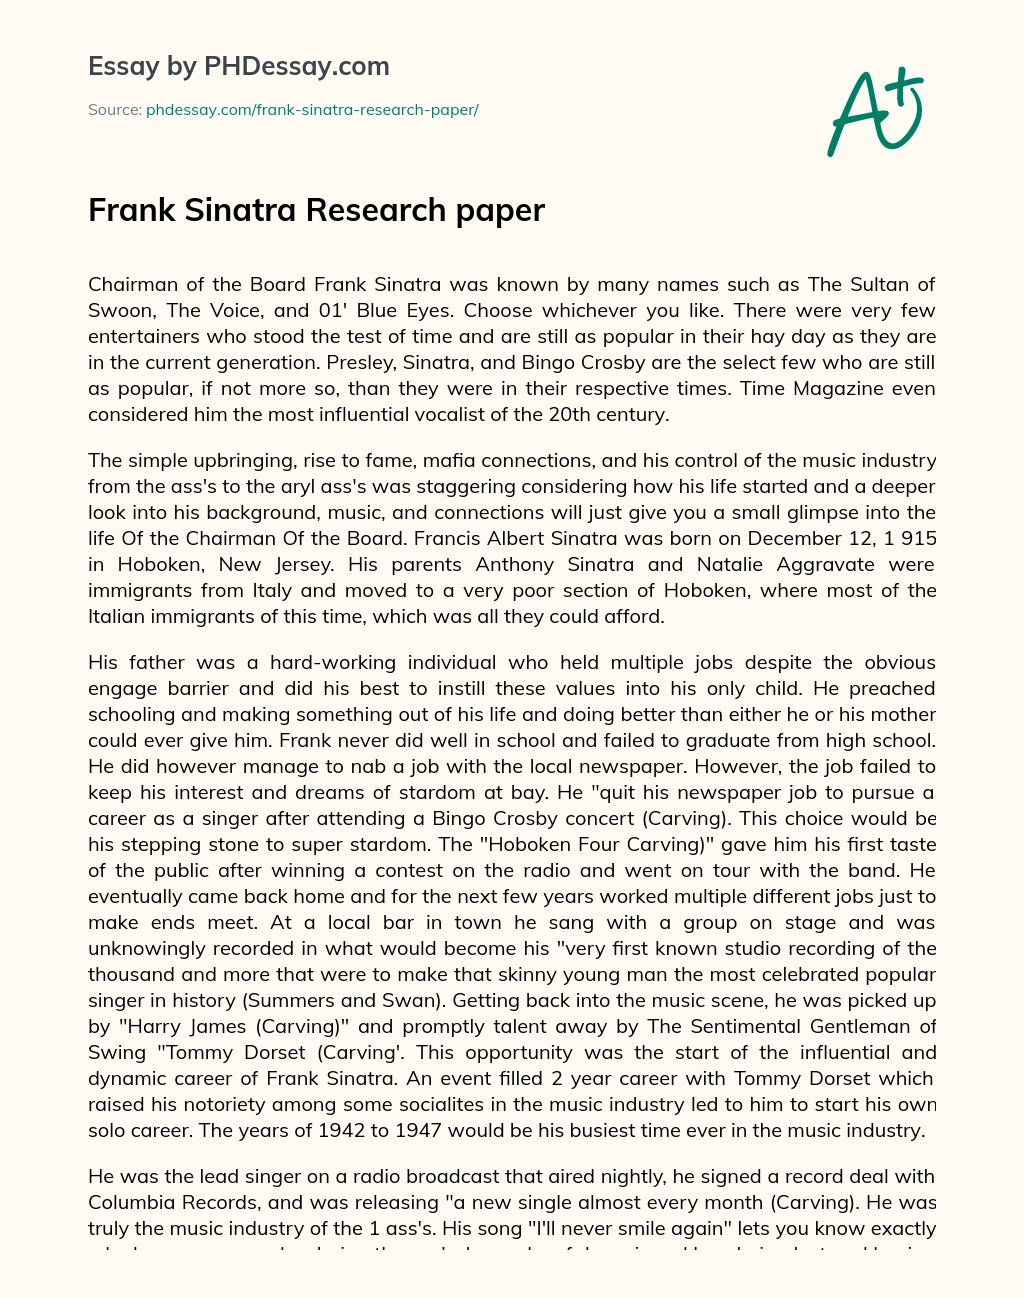 Frank Sinatra Research paper essay